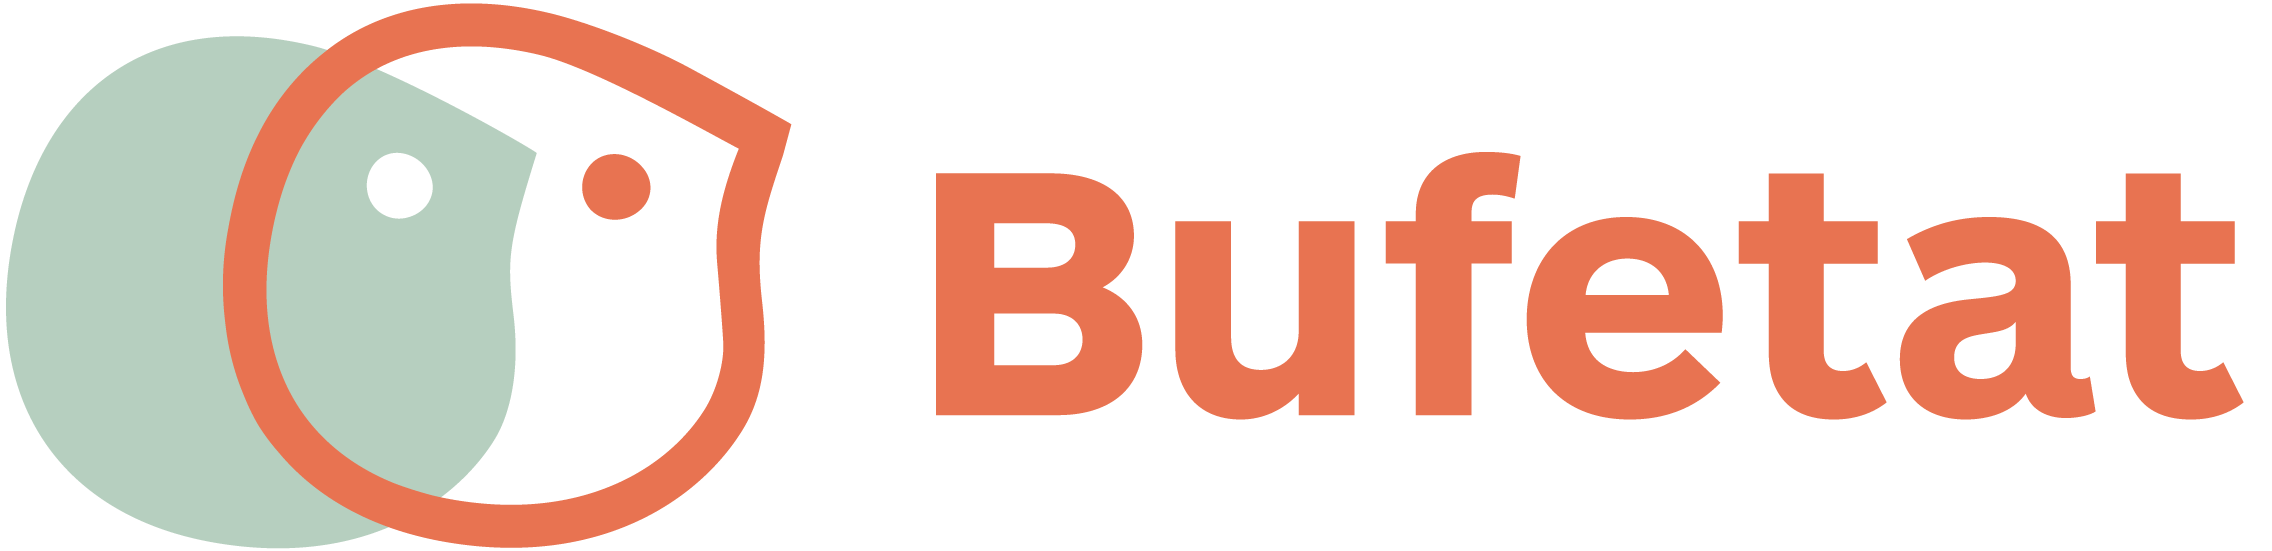 bufetat_logo_horisontal_rgb